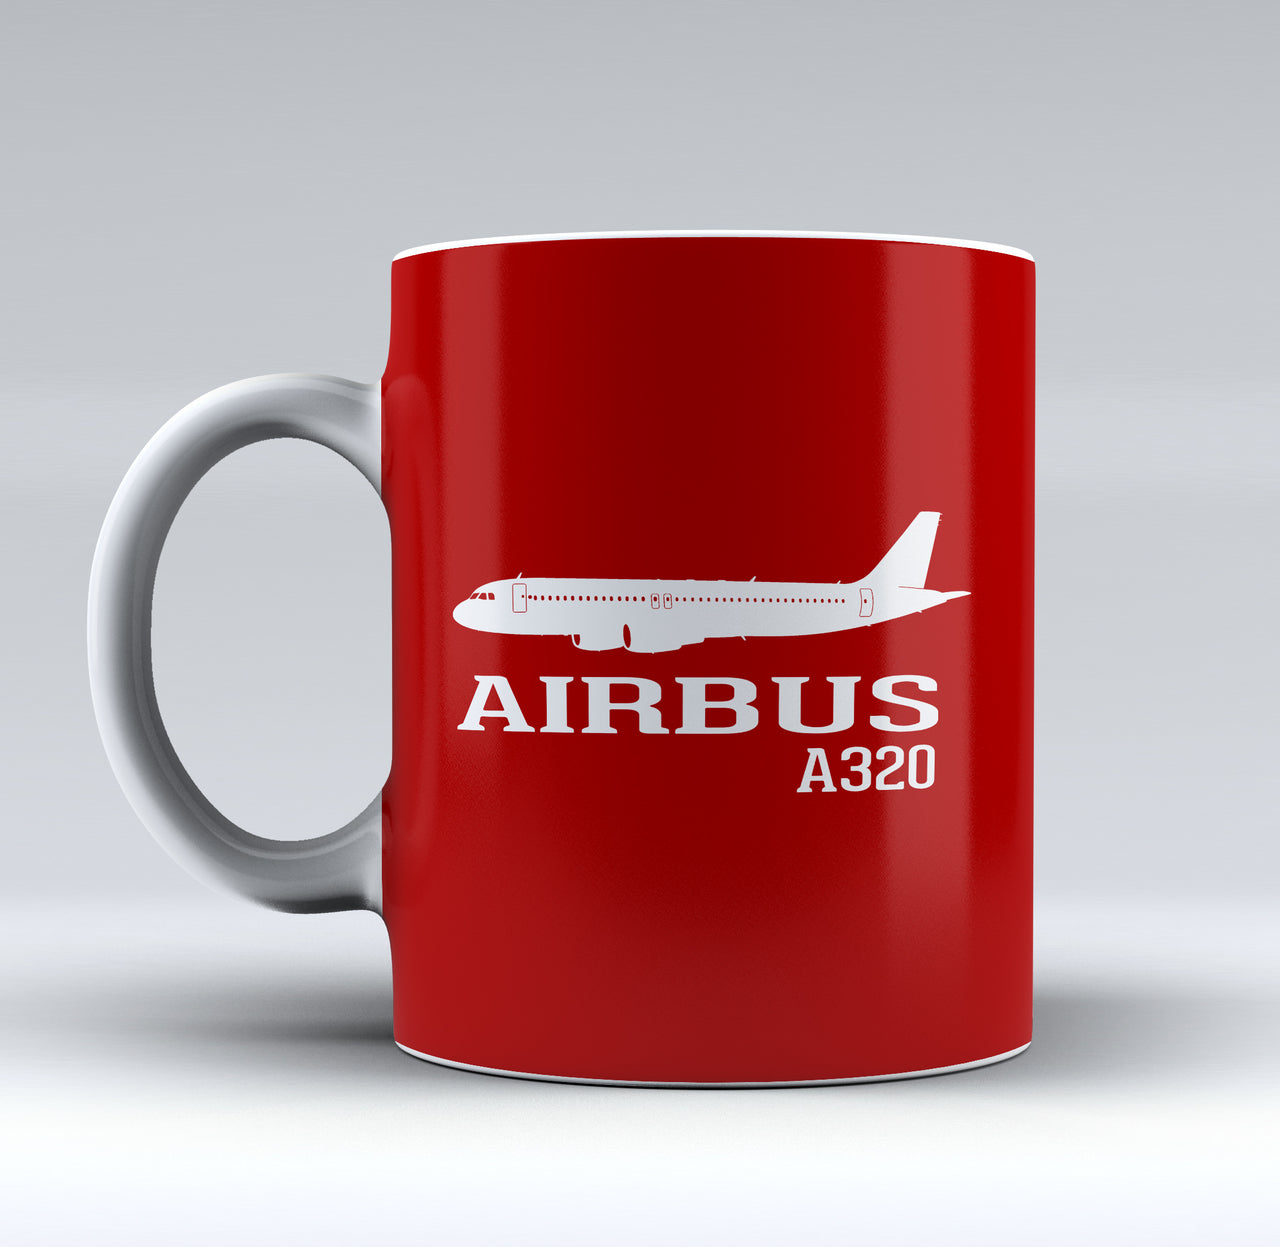 Airbus A320 Printed & Designed Mugs